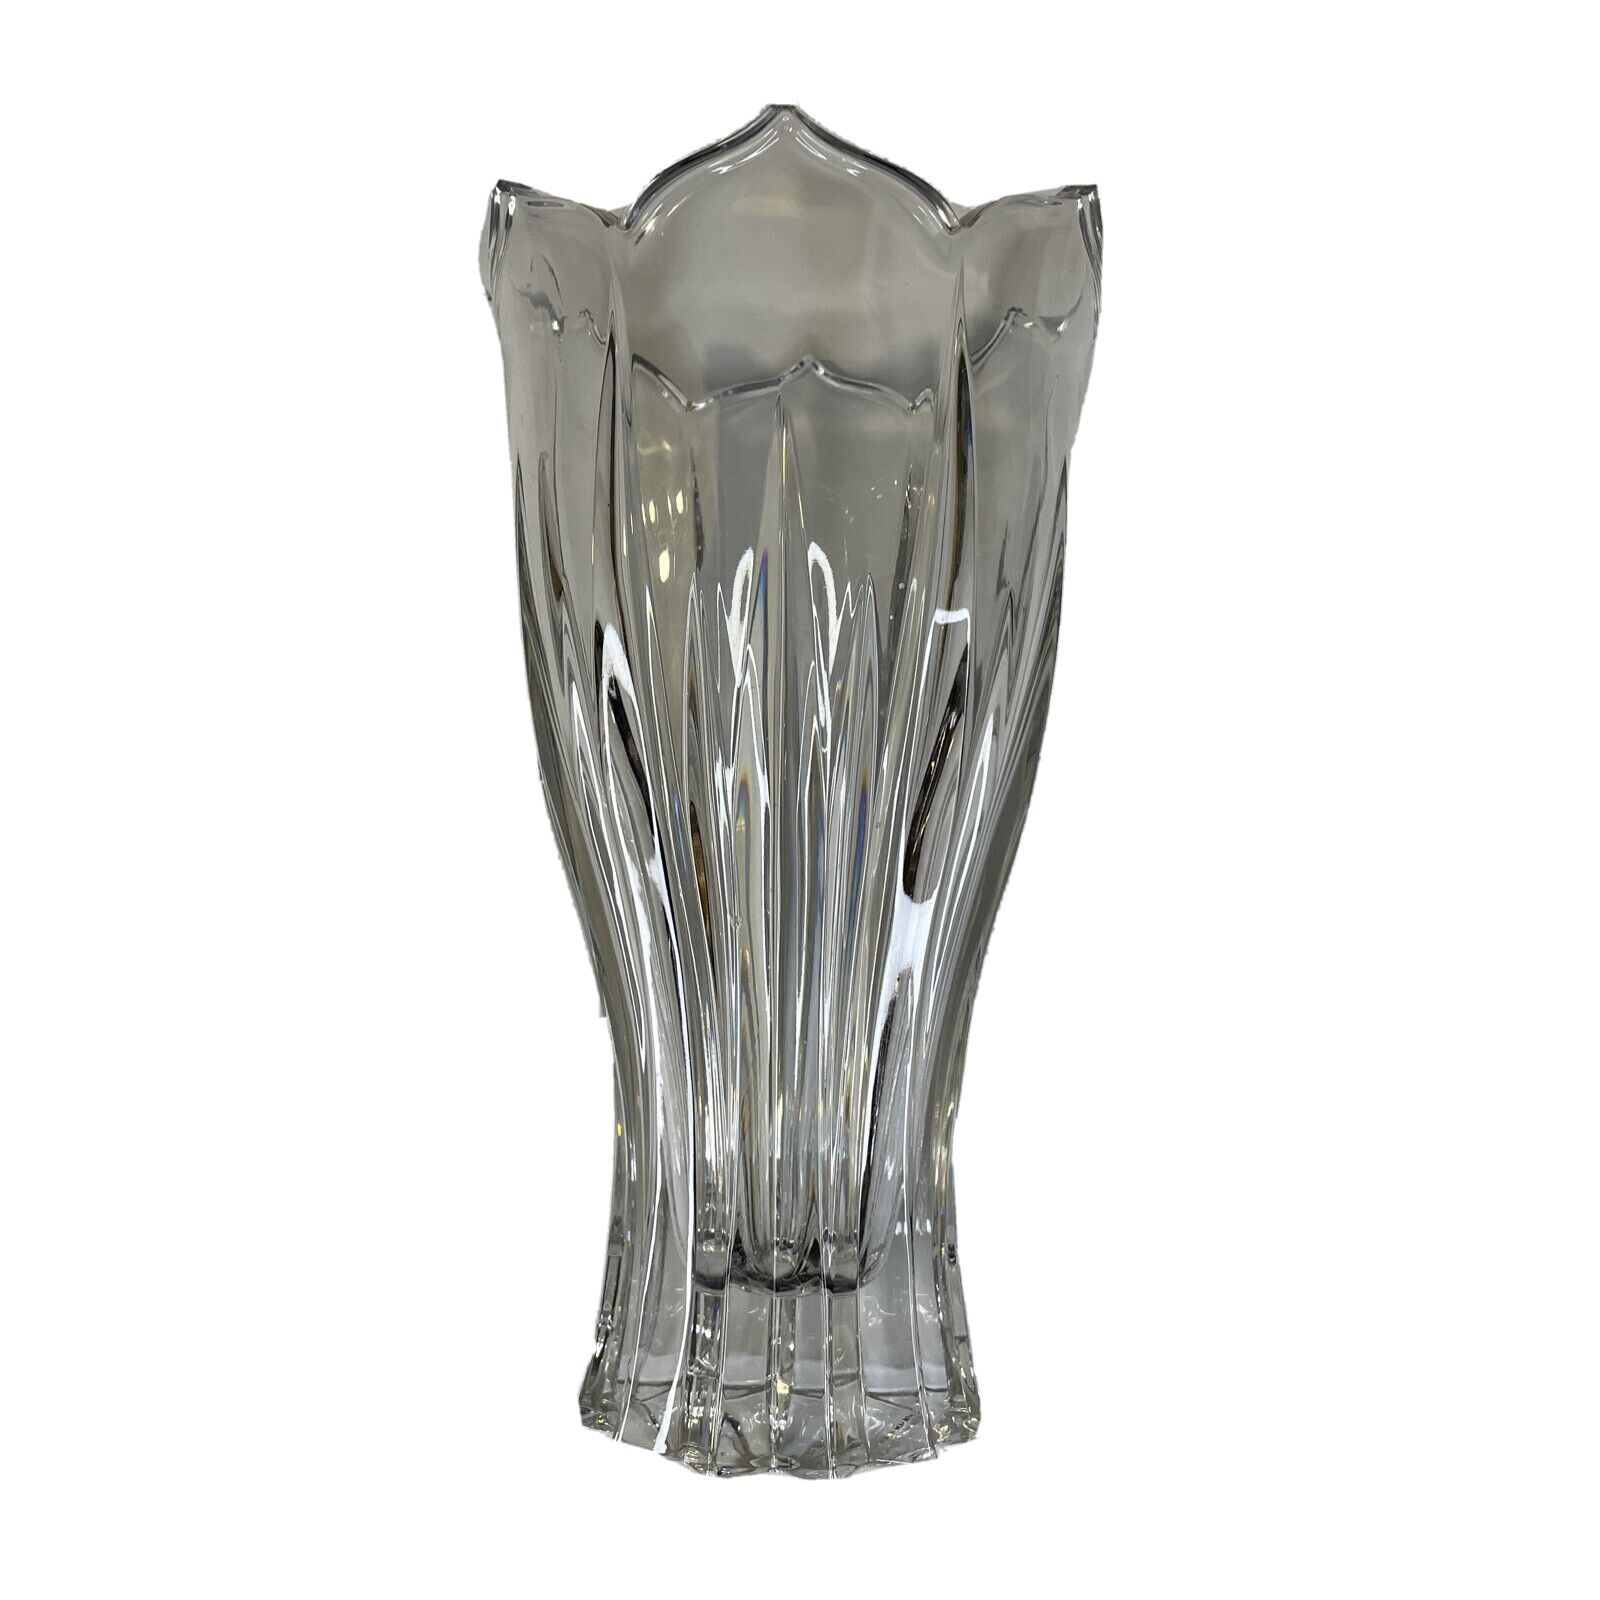 Gorham Lotus Vase leaded crystal vintage Large tulip shape 10 inches 1990 German